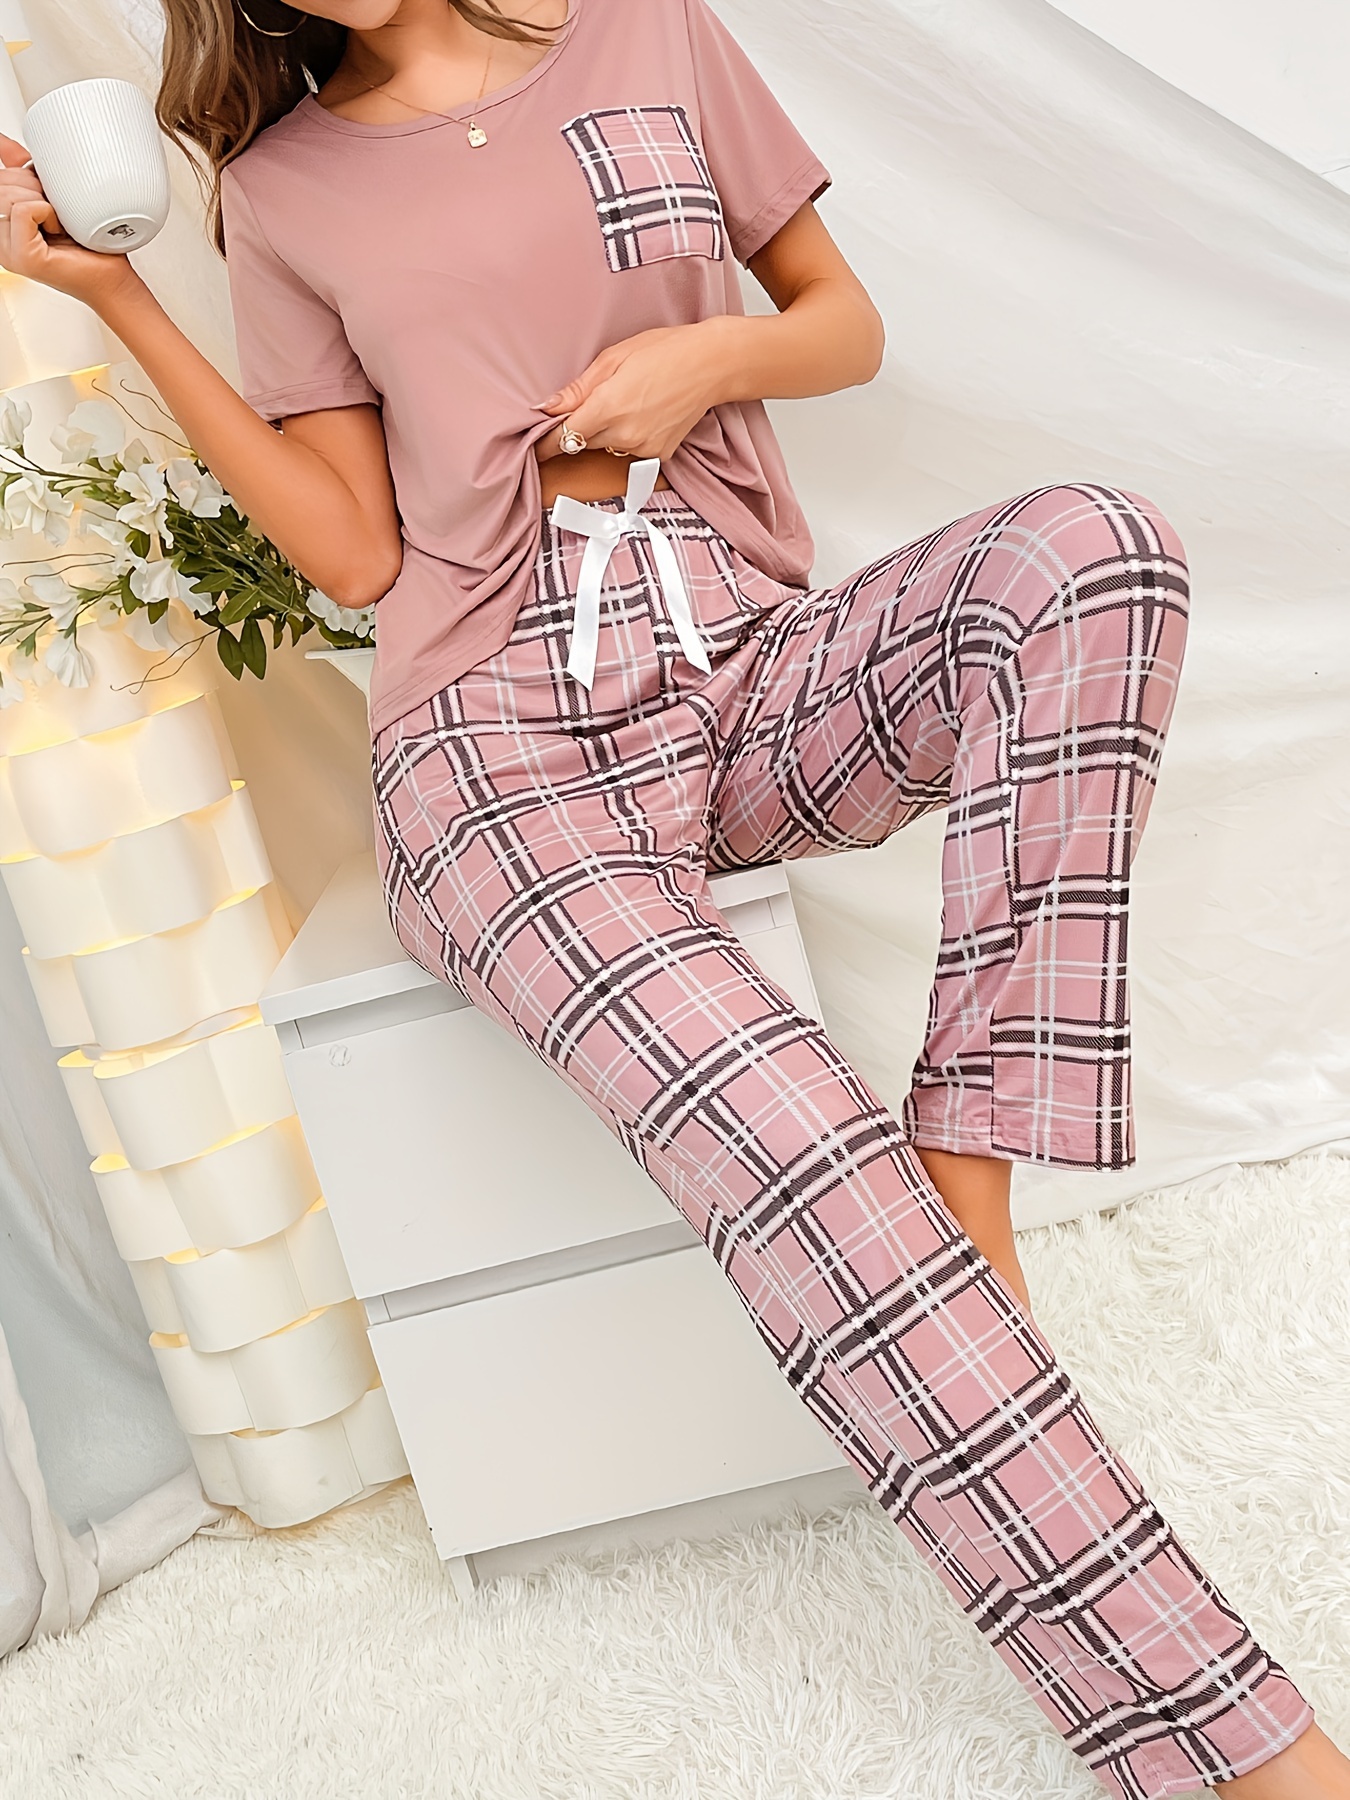 Women's Pajama Sets